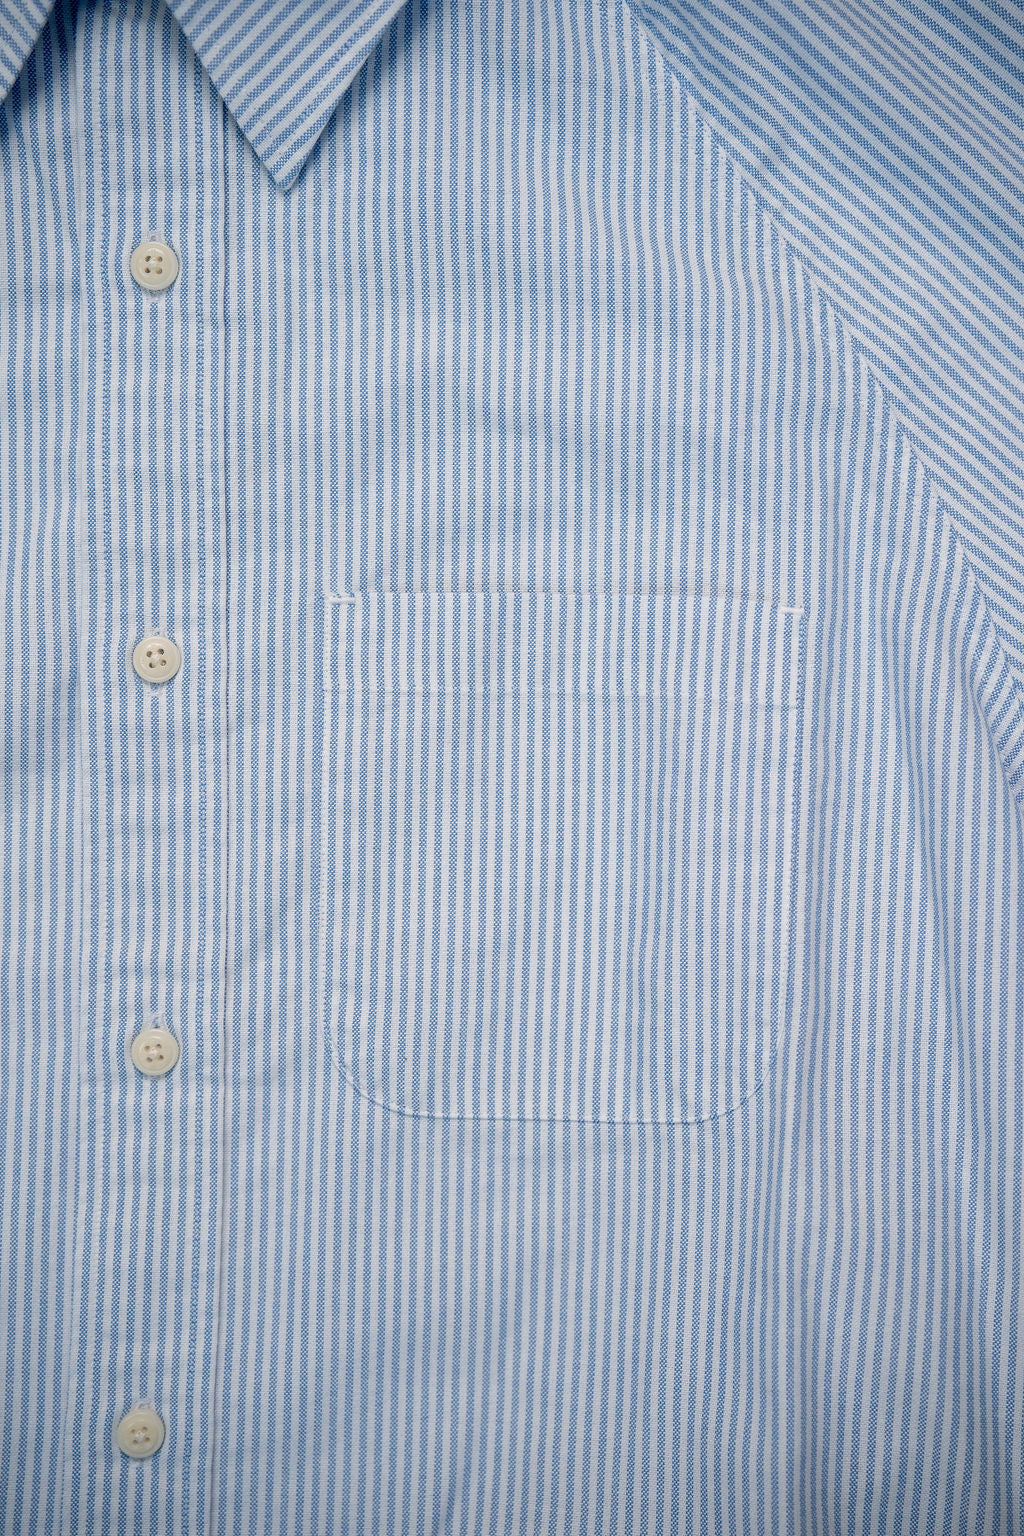 Heimat Textil Oxford Shirt - Striped Trail Blue/Seashell Bengal